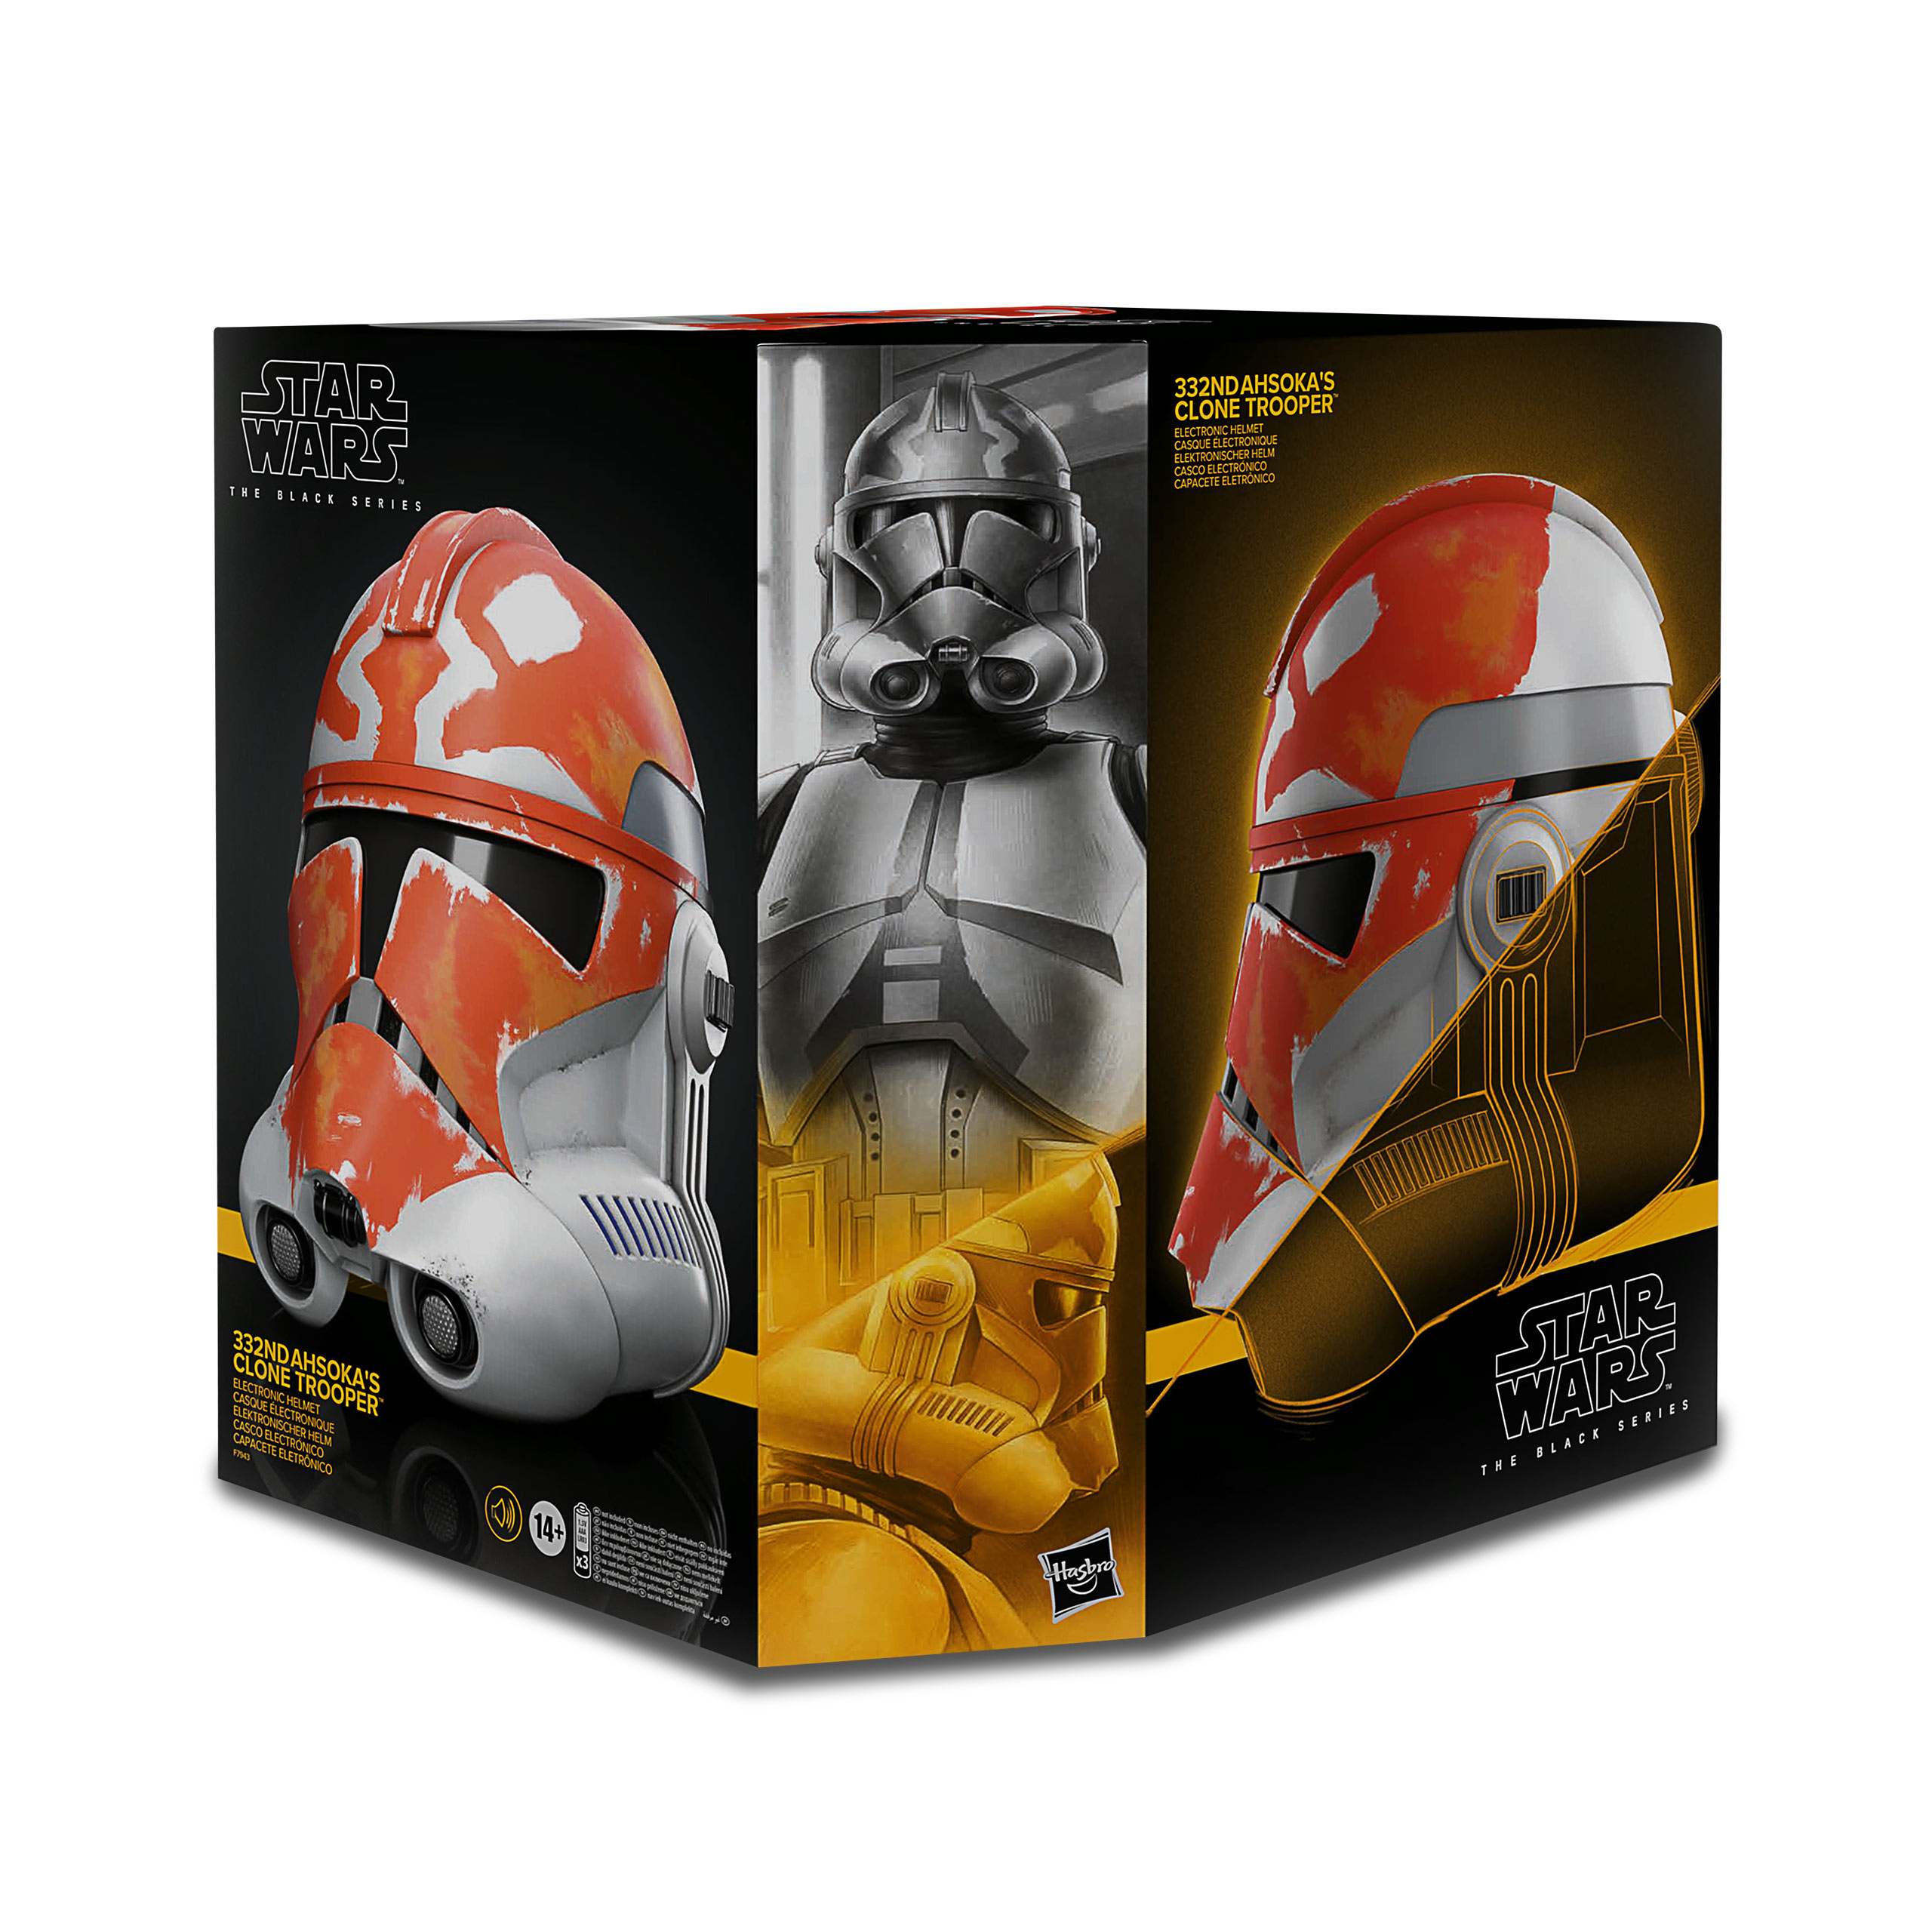 Réplique de casque premium de Clone Trooper Ahsoka Tano 332nd avec distorsion de voix - Star Wars